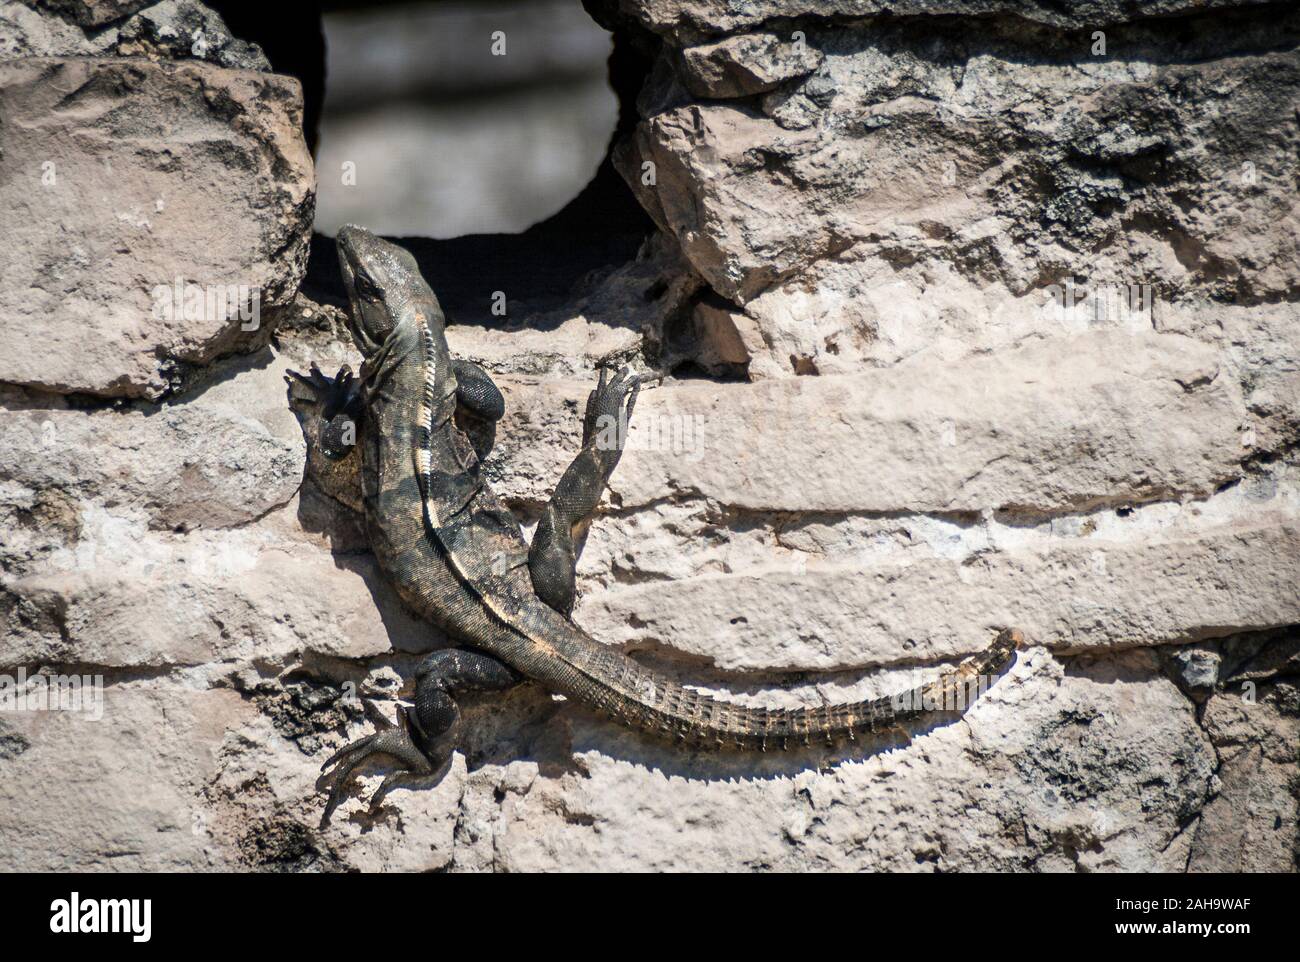 Black Iguana near Mayan ruins in Mexico. Stock Photo